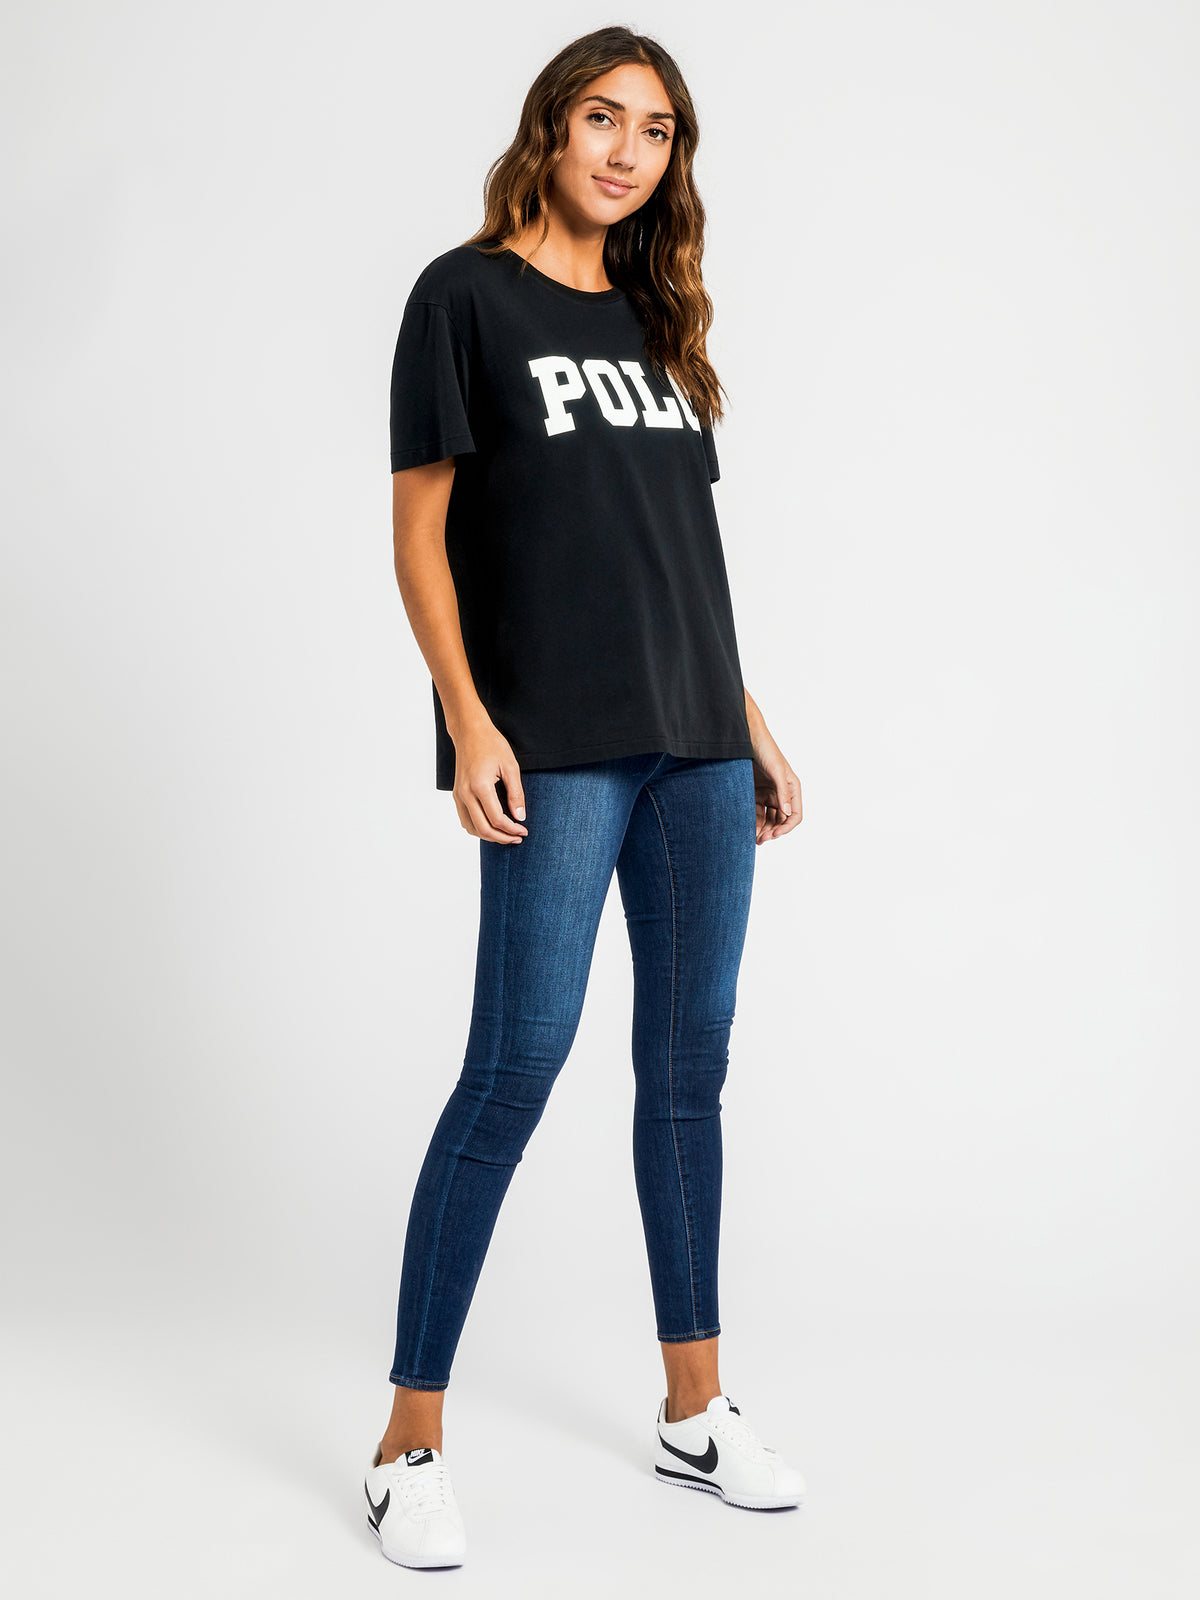 Big Polo T-Shirt in Black